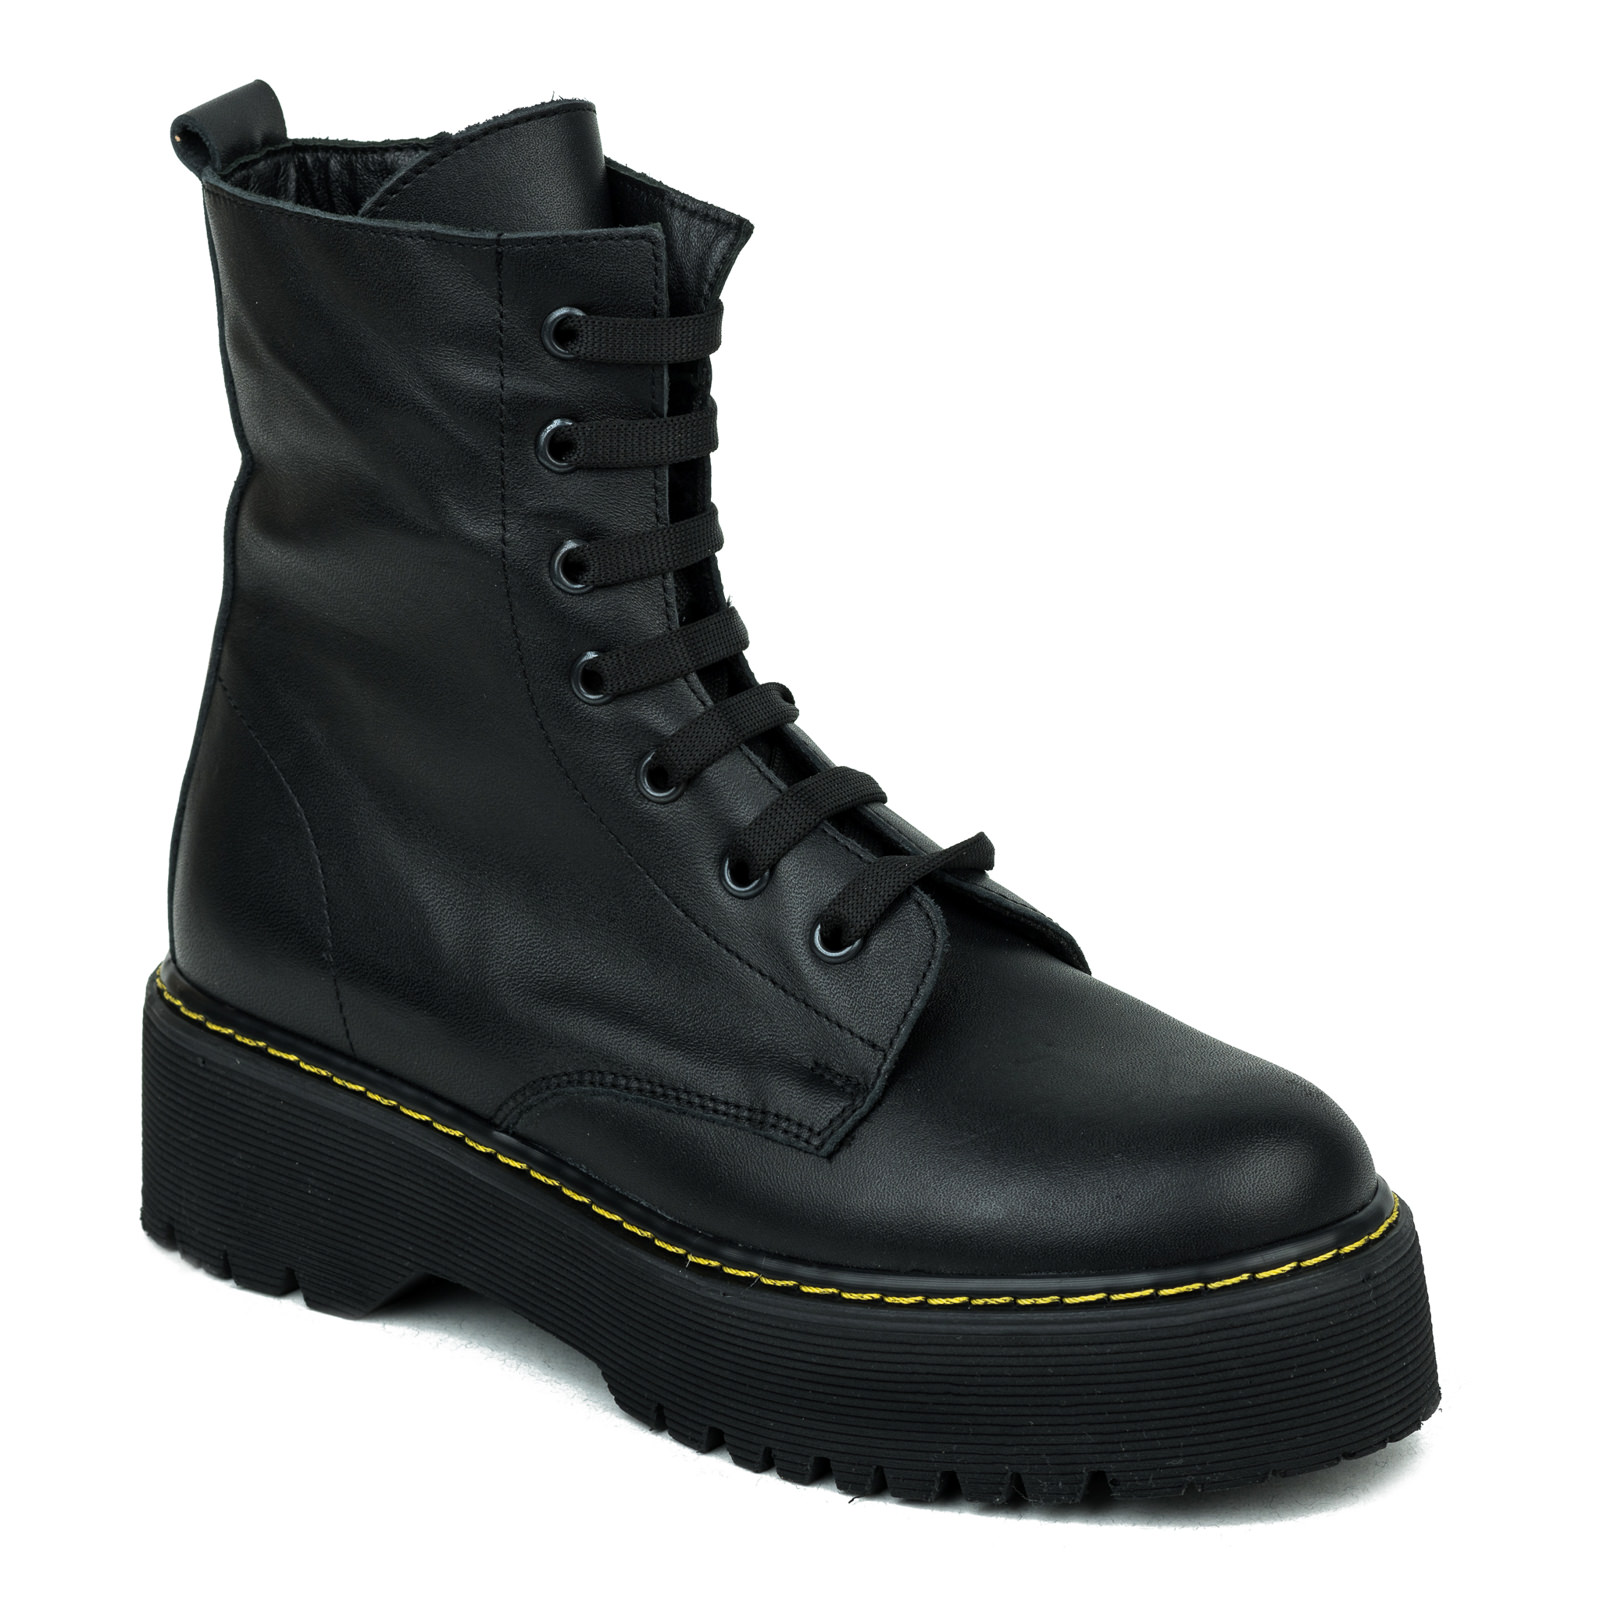 Leather WATERPROOF boots B207 - BLACK